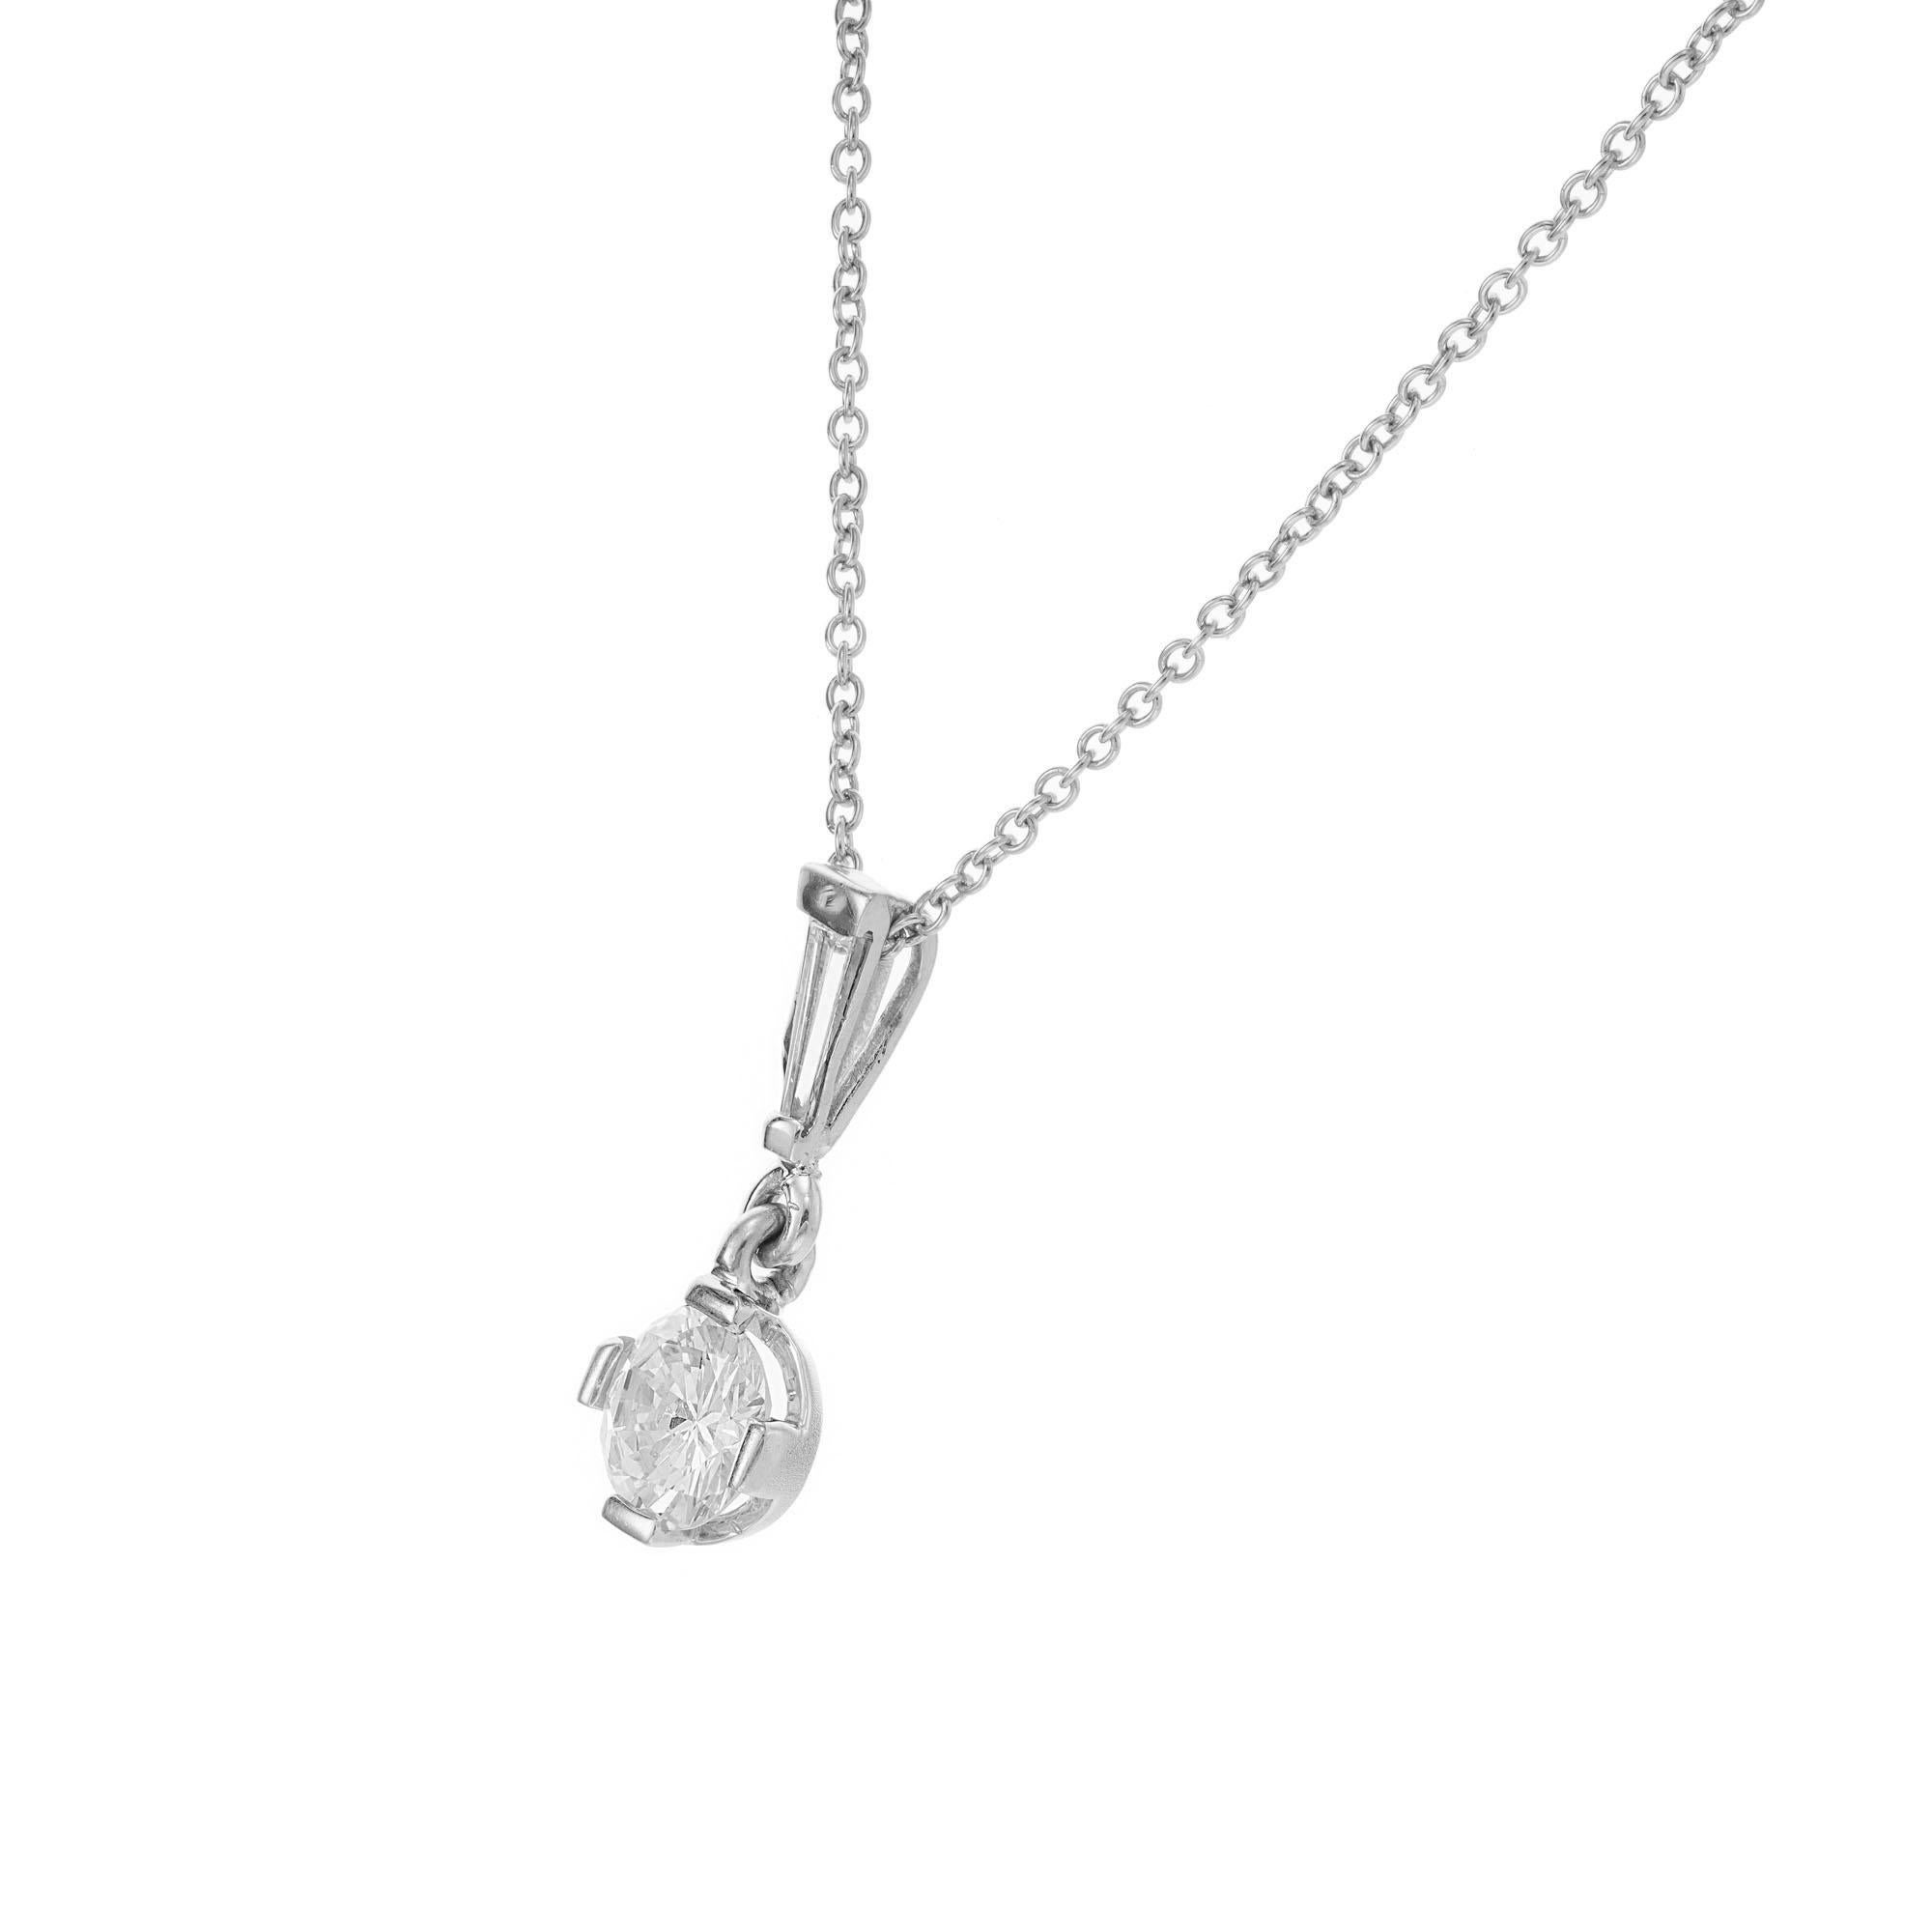 1940's late Art Deco diamond pendant necklace. EGL certified center stone with a tapered baguette accent diamond set in platinum. 16 inch chain.  

1 round brilliant cut diamond, L-M VS approx. .68cts EGL Certificate # 400145984D
1 baguette diamond,